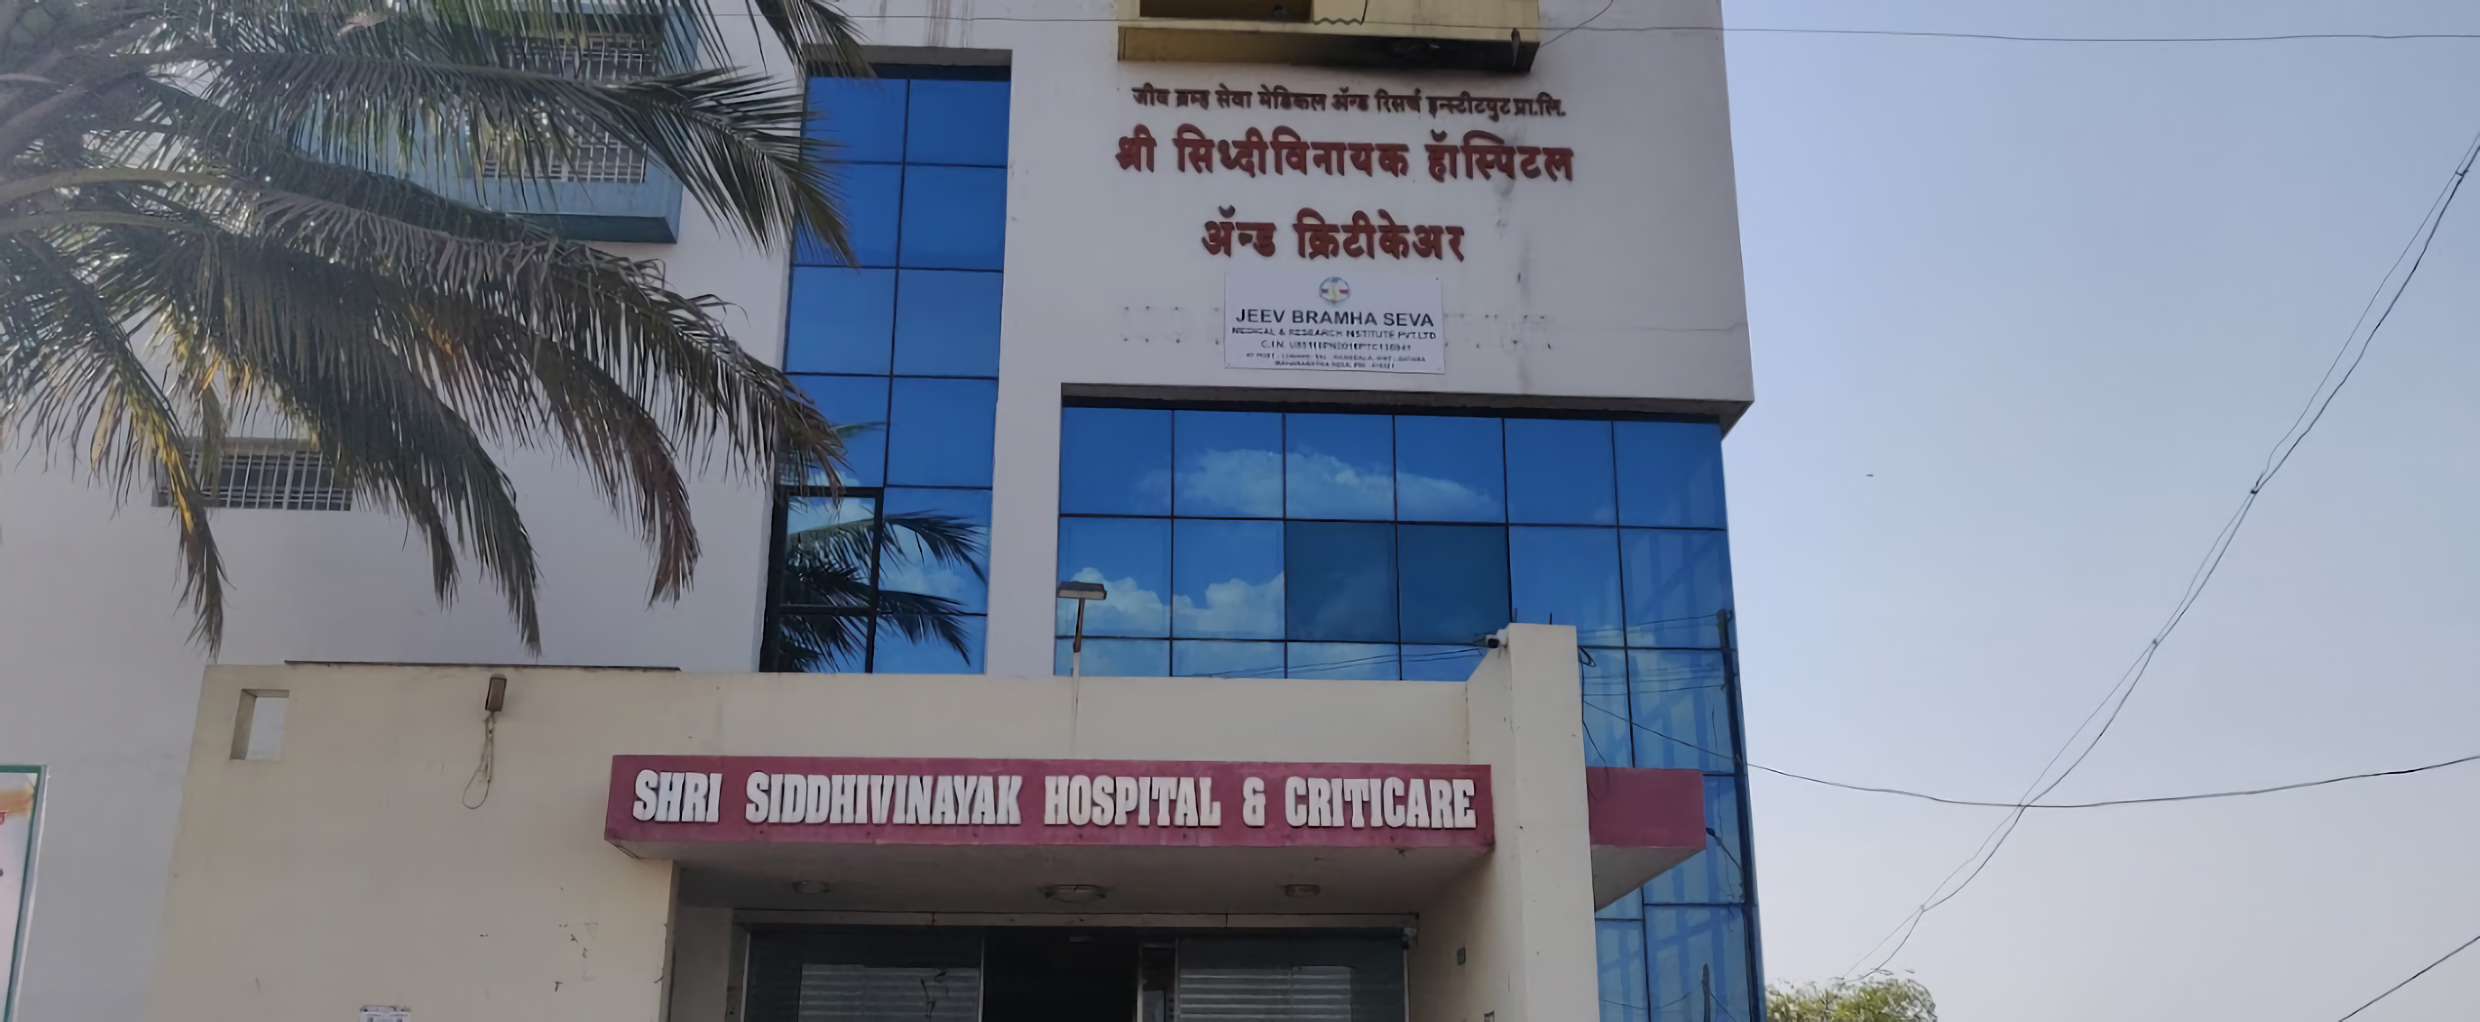 Shri Siddhivinayak Hospital And Criticare